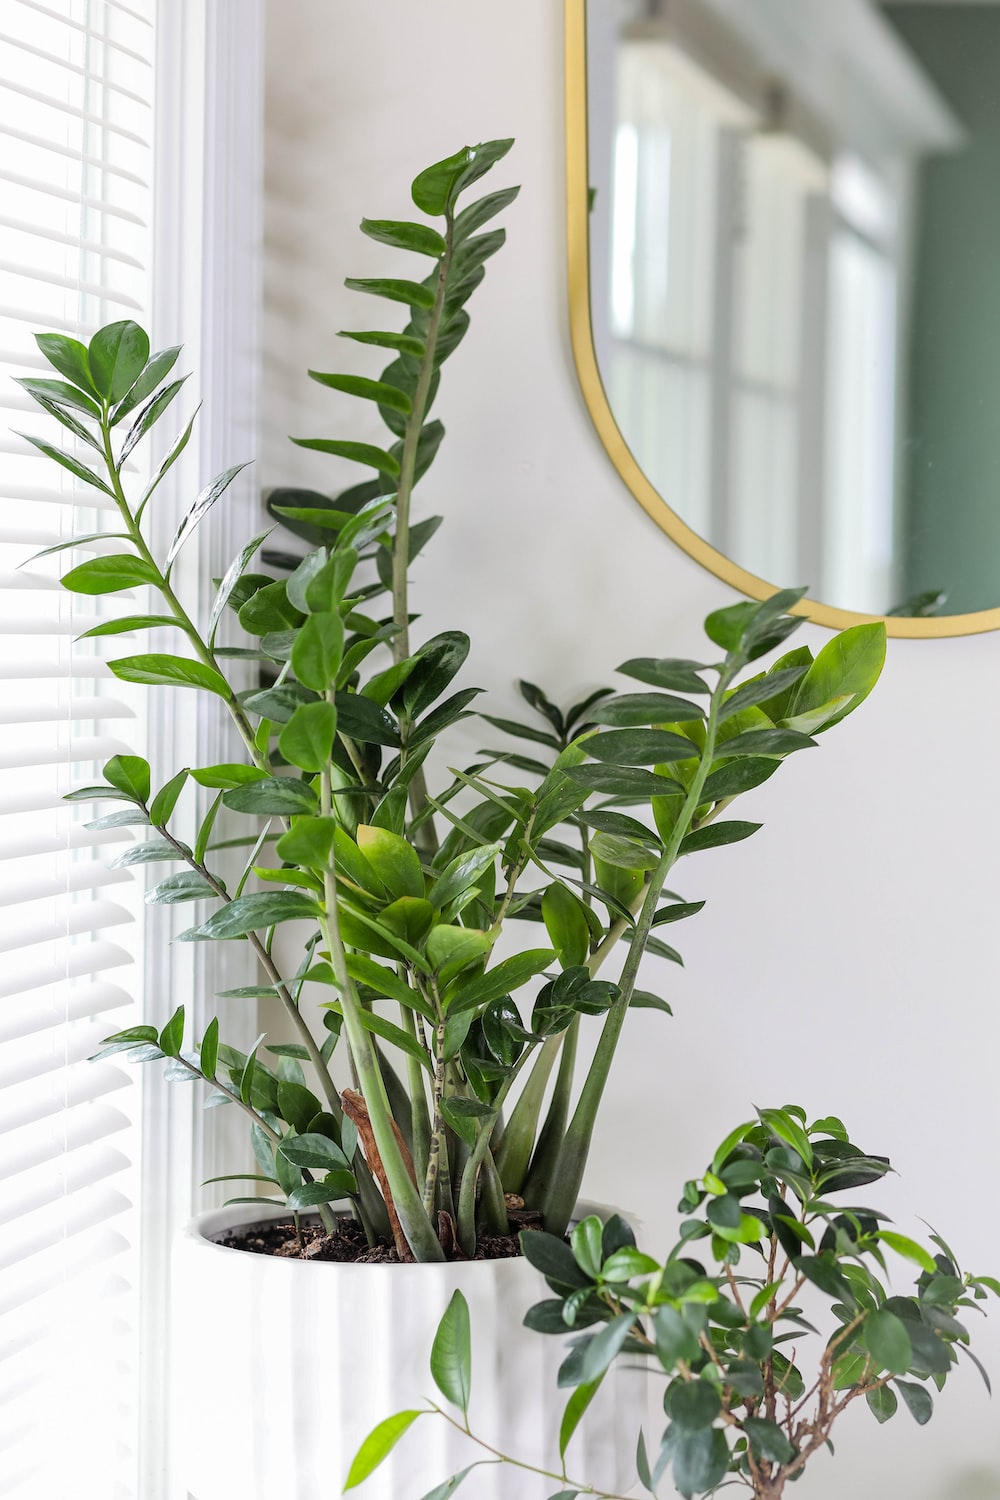 Will plants grow in office light?